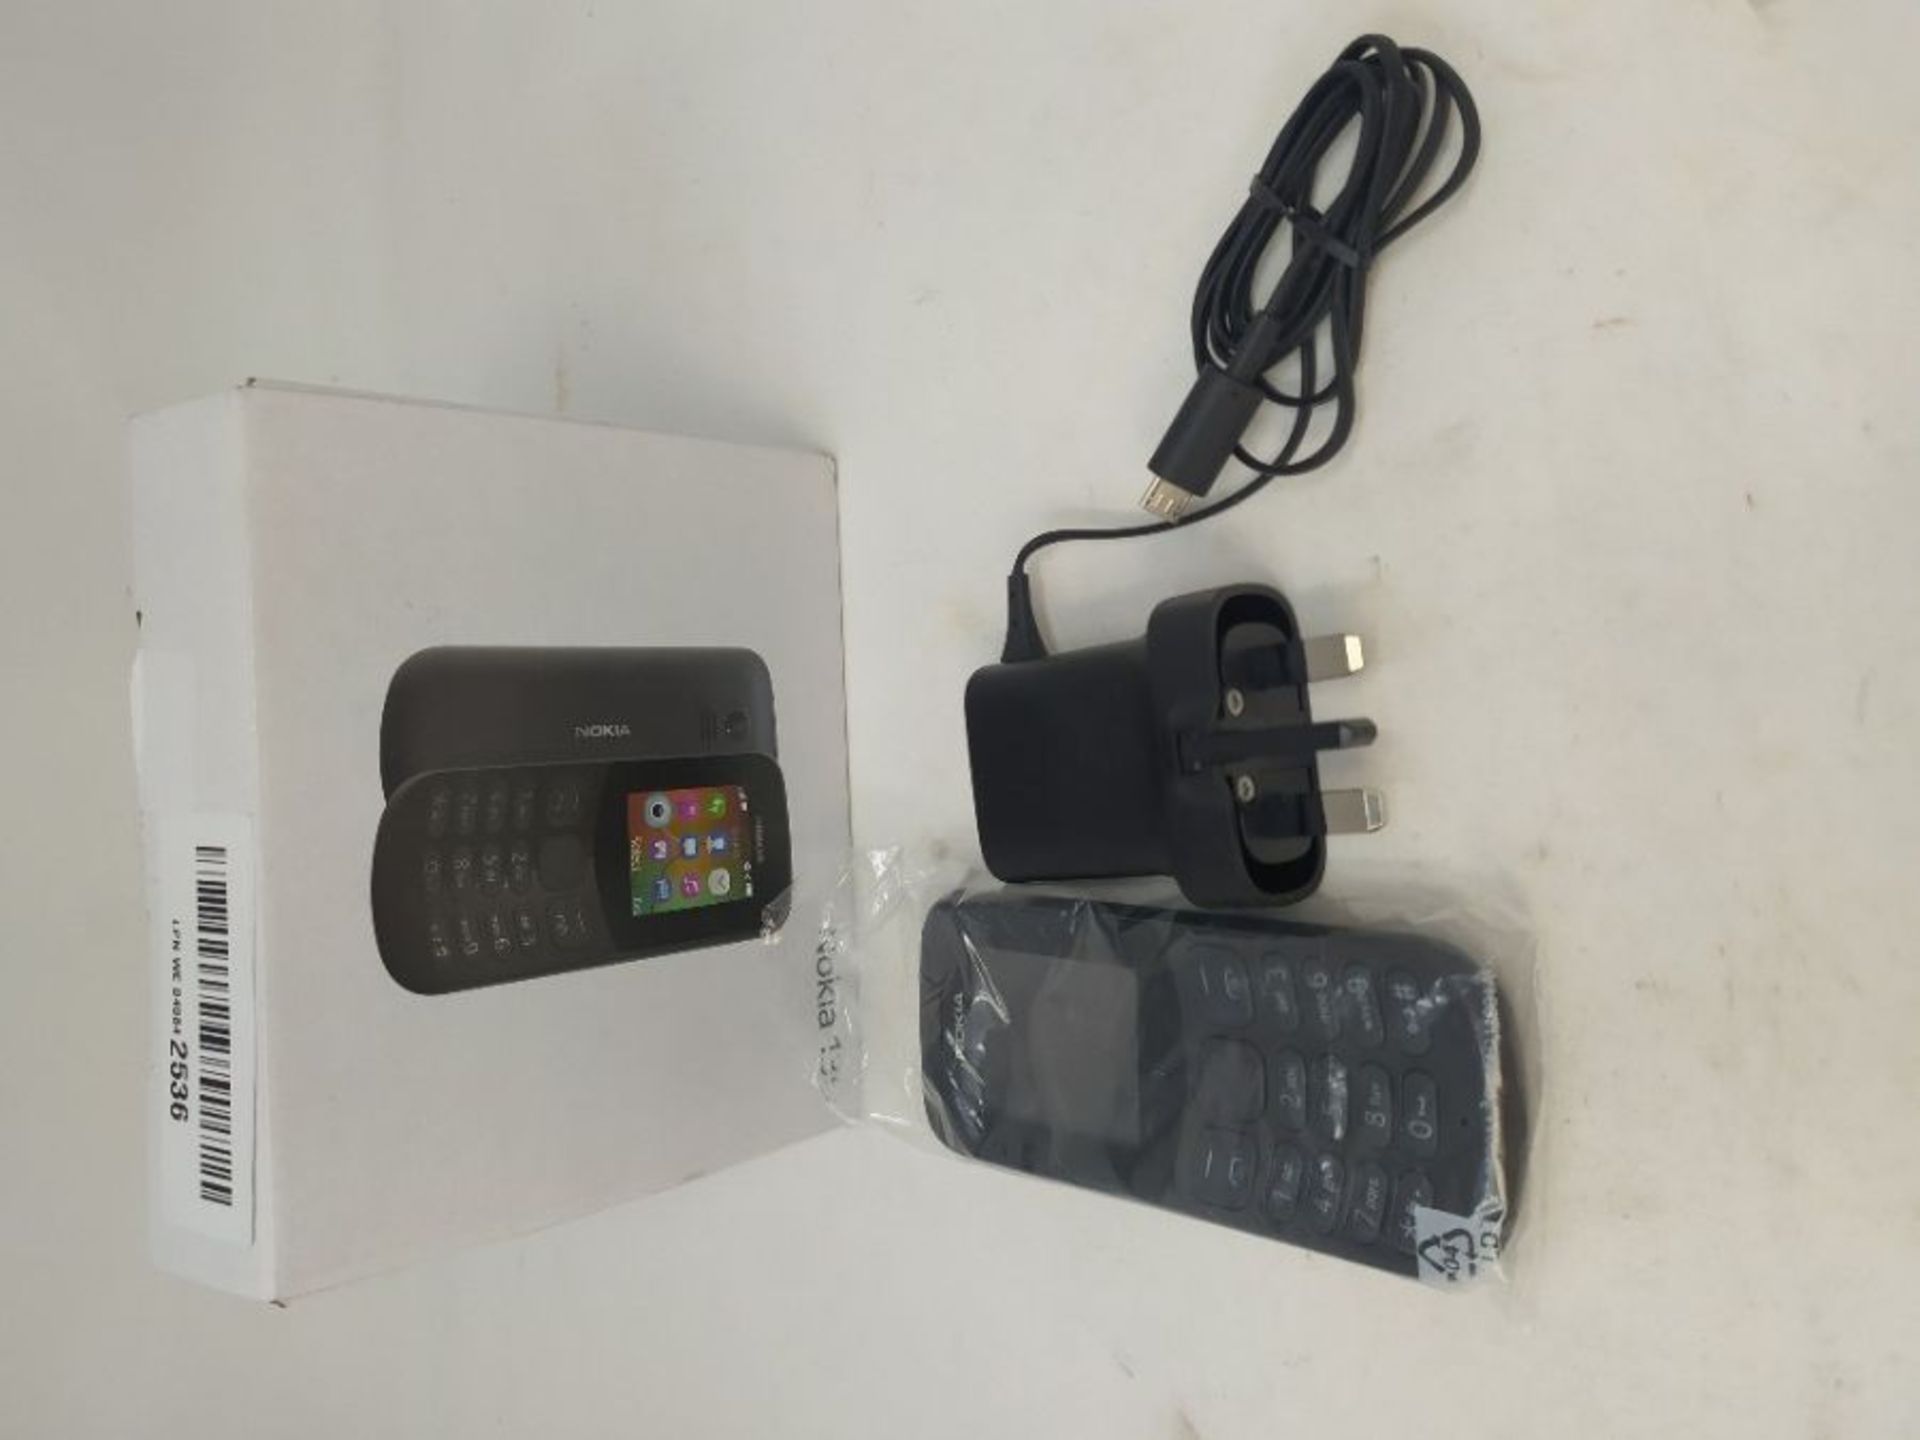 Nokia 130 SIM-Free Mobile Phone (2017 Edition) - Black - Image 2 of 2